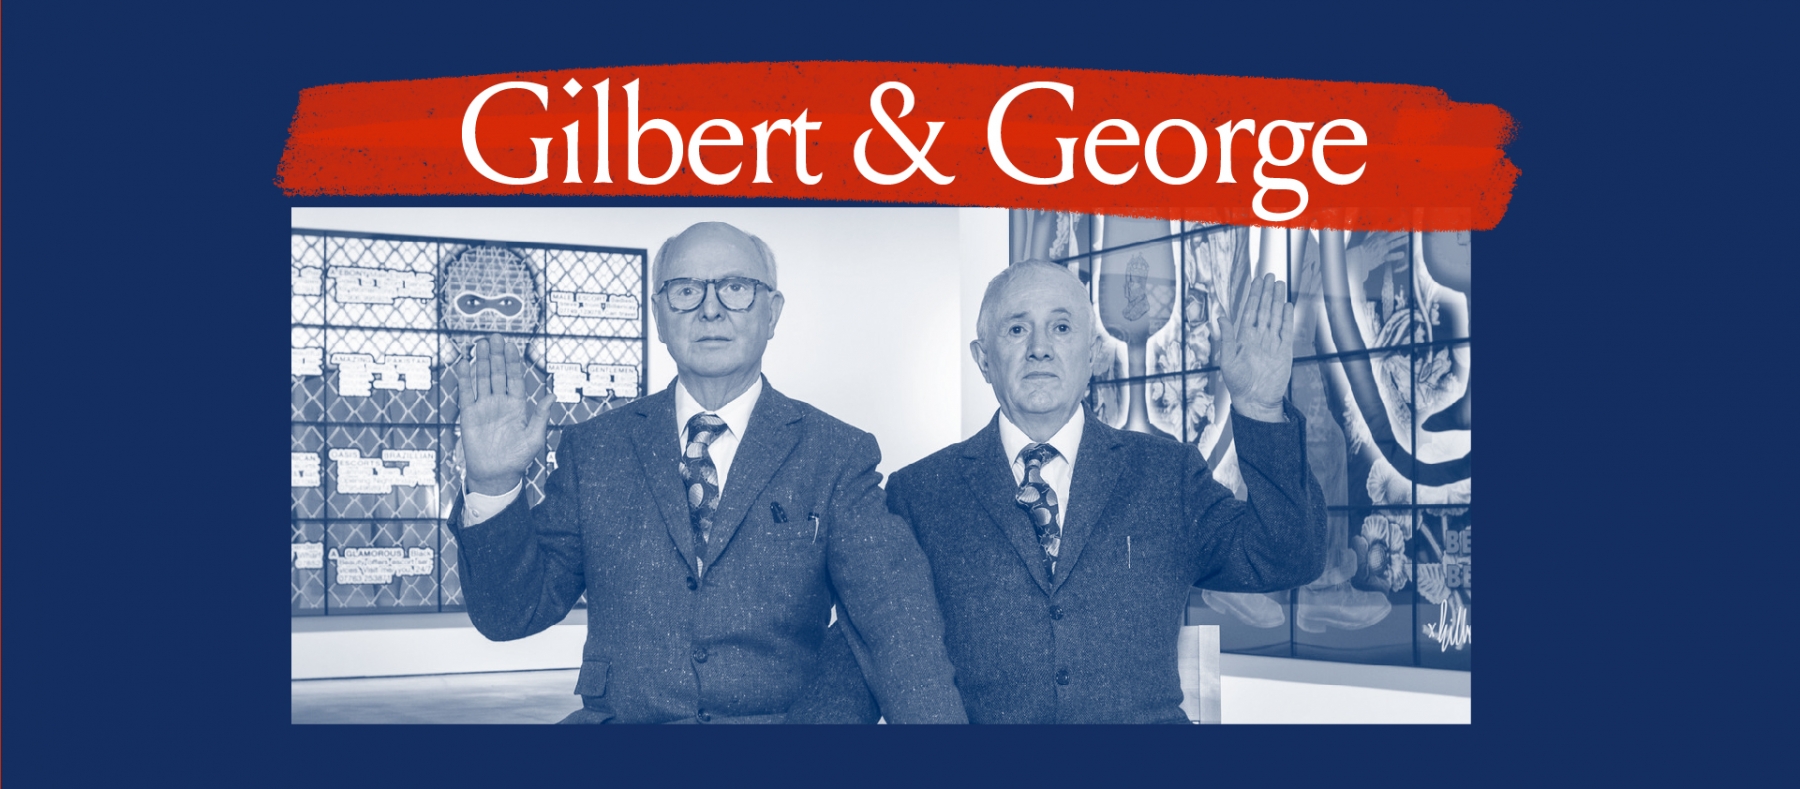 Gilbert & George Portrait Banner